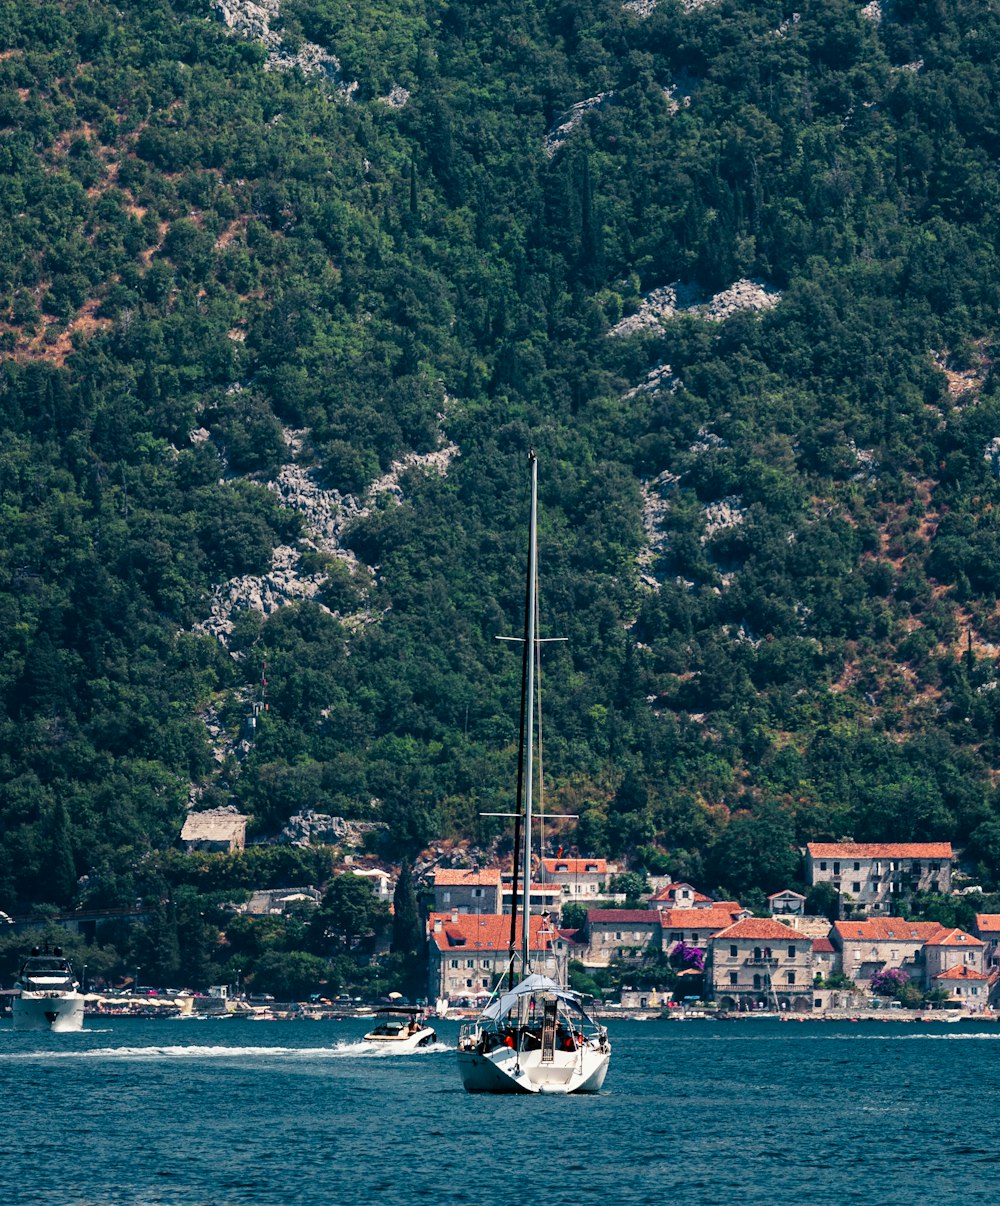 a sailboat in a body of water near a hillside